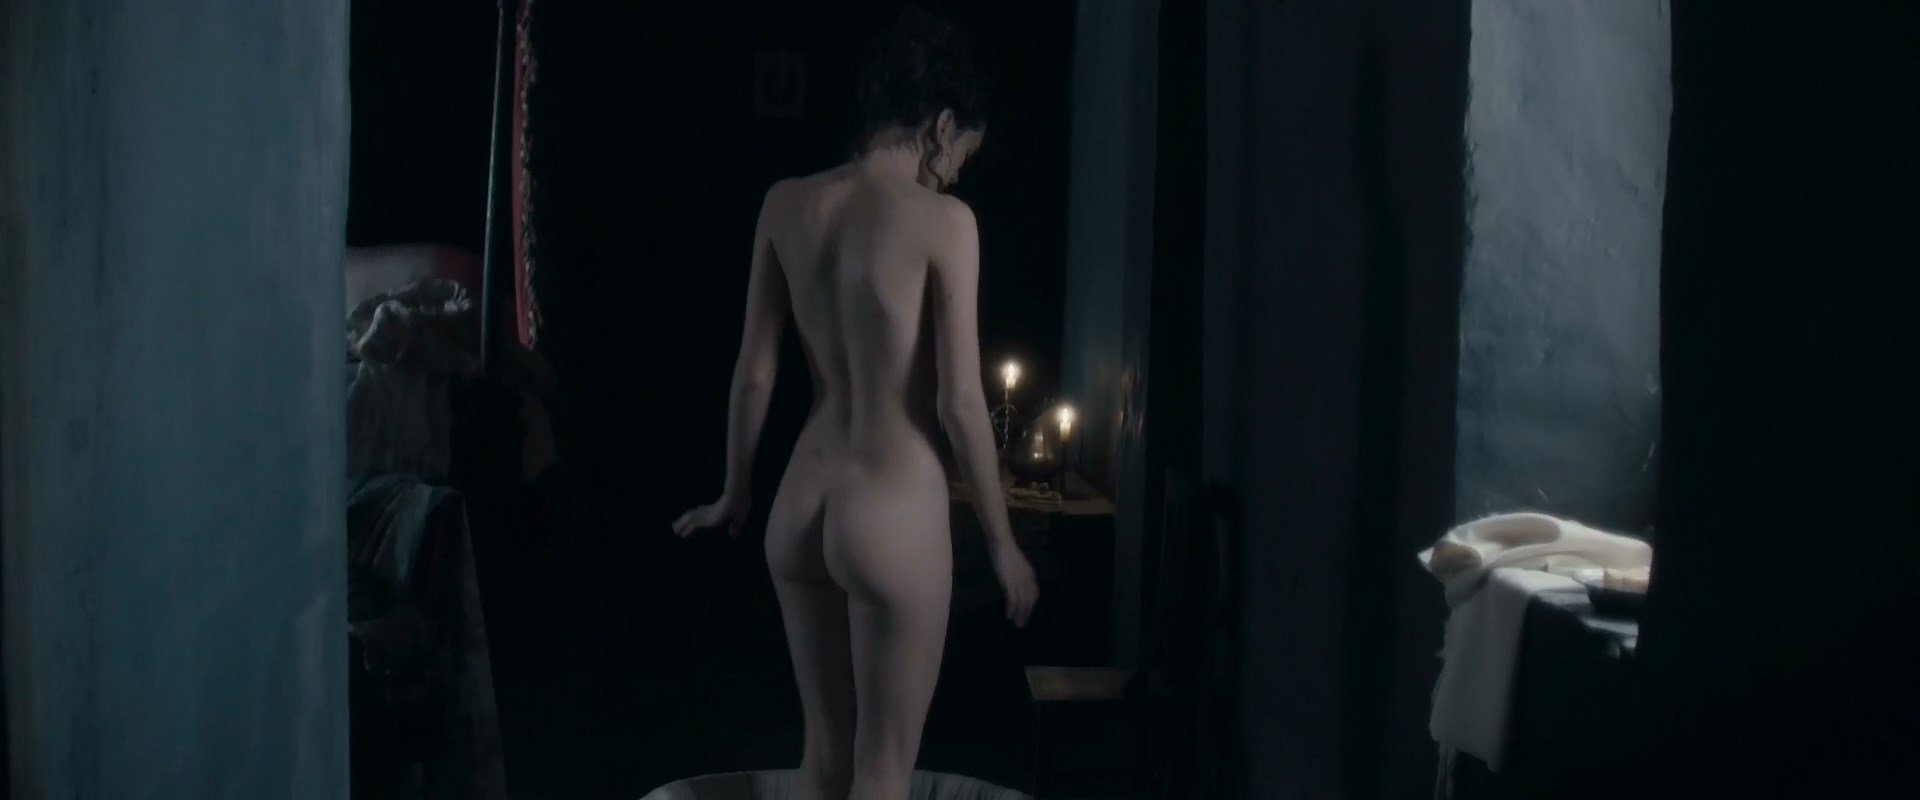 Odiya Rush Sex Scenes - Watch Online - Saoirse Ronan, Odeya Rush - Lady Bird (2017) HD 1080p